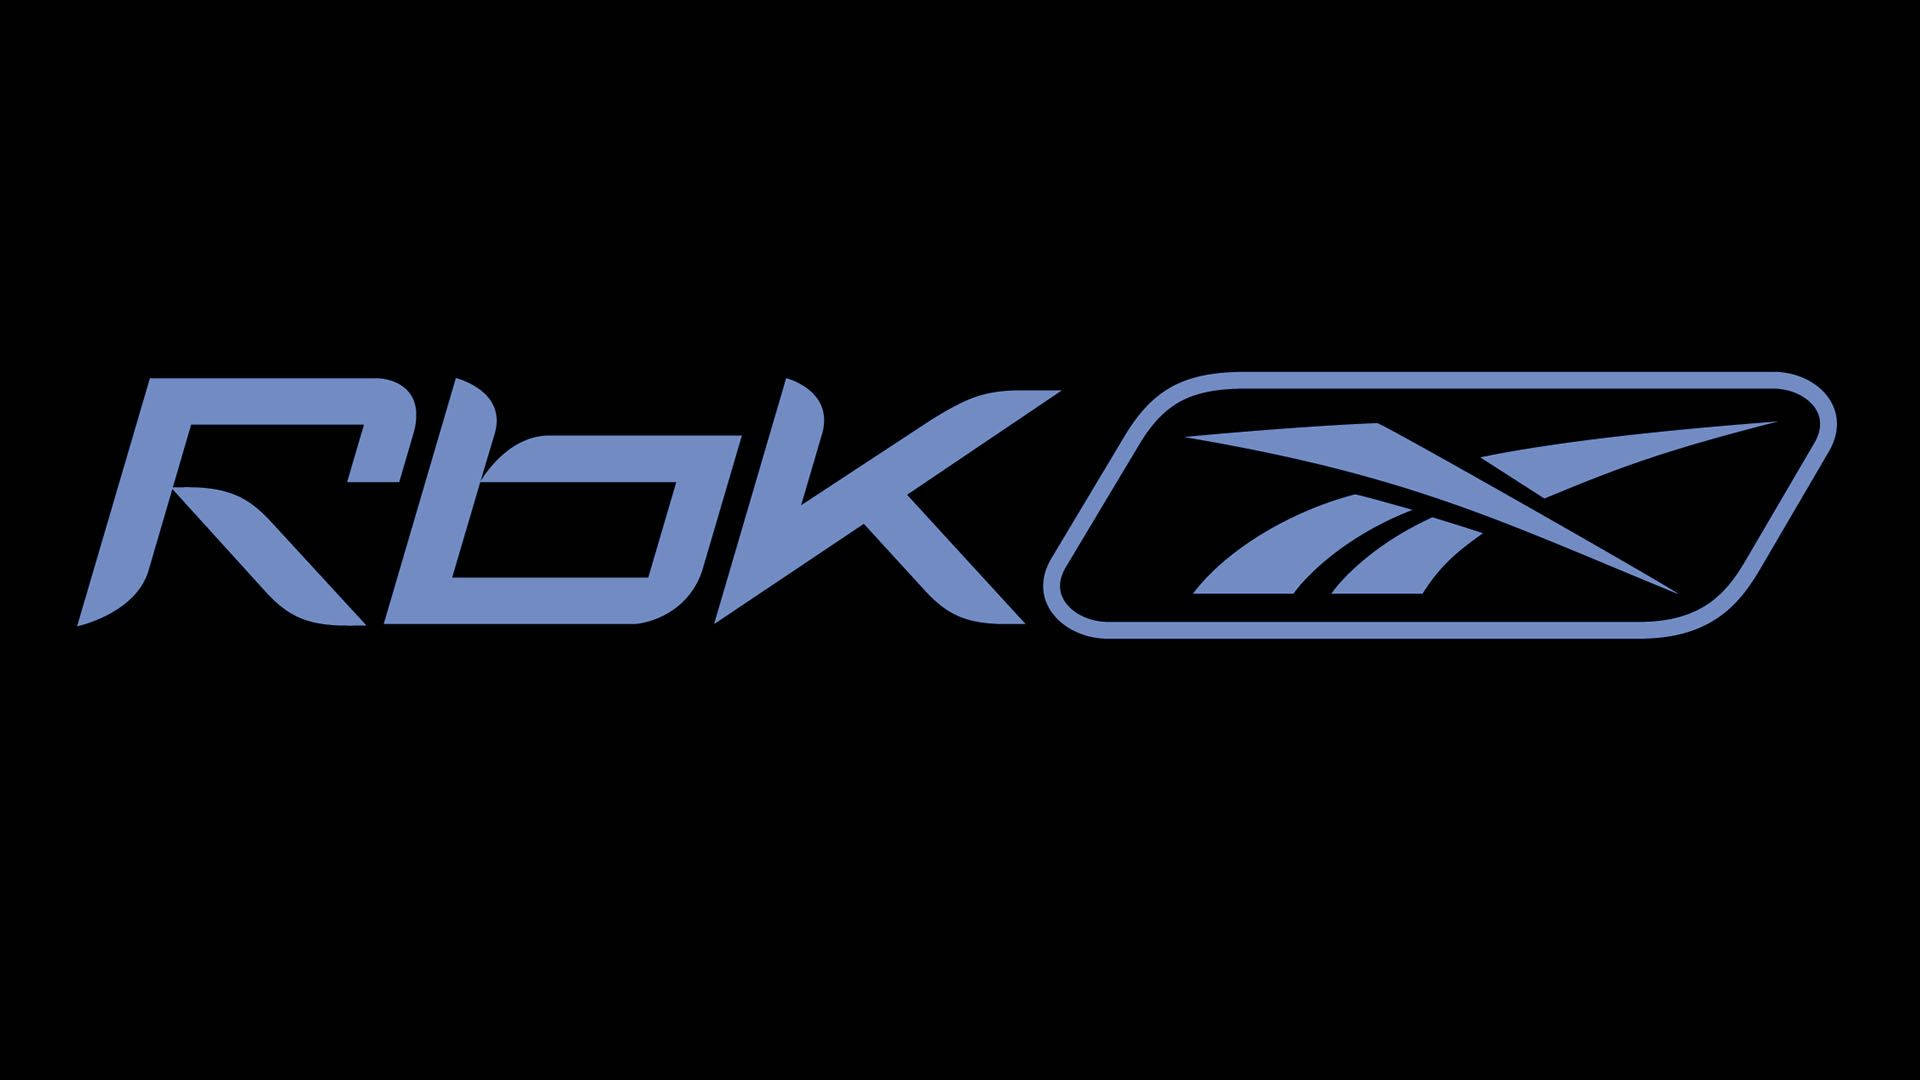 Blue Revised Reebok Logo Background